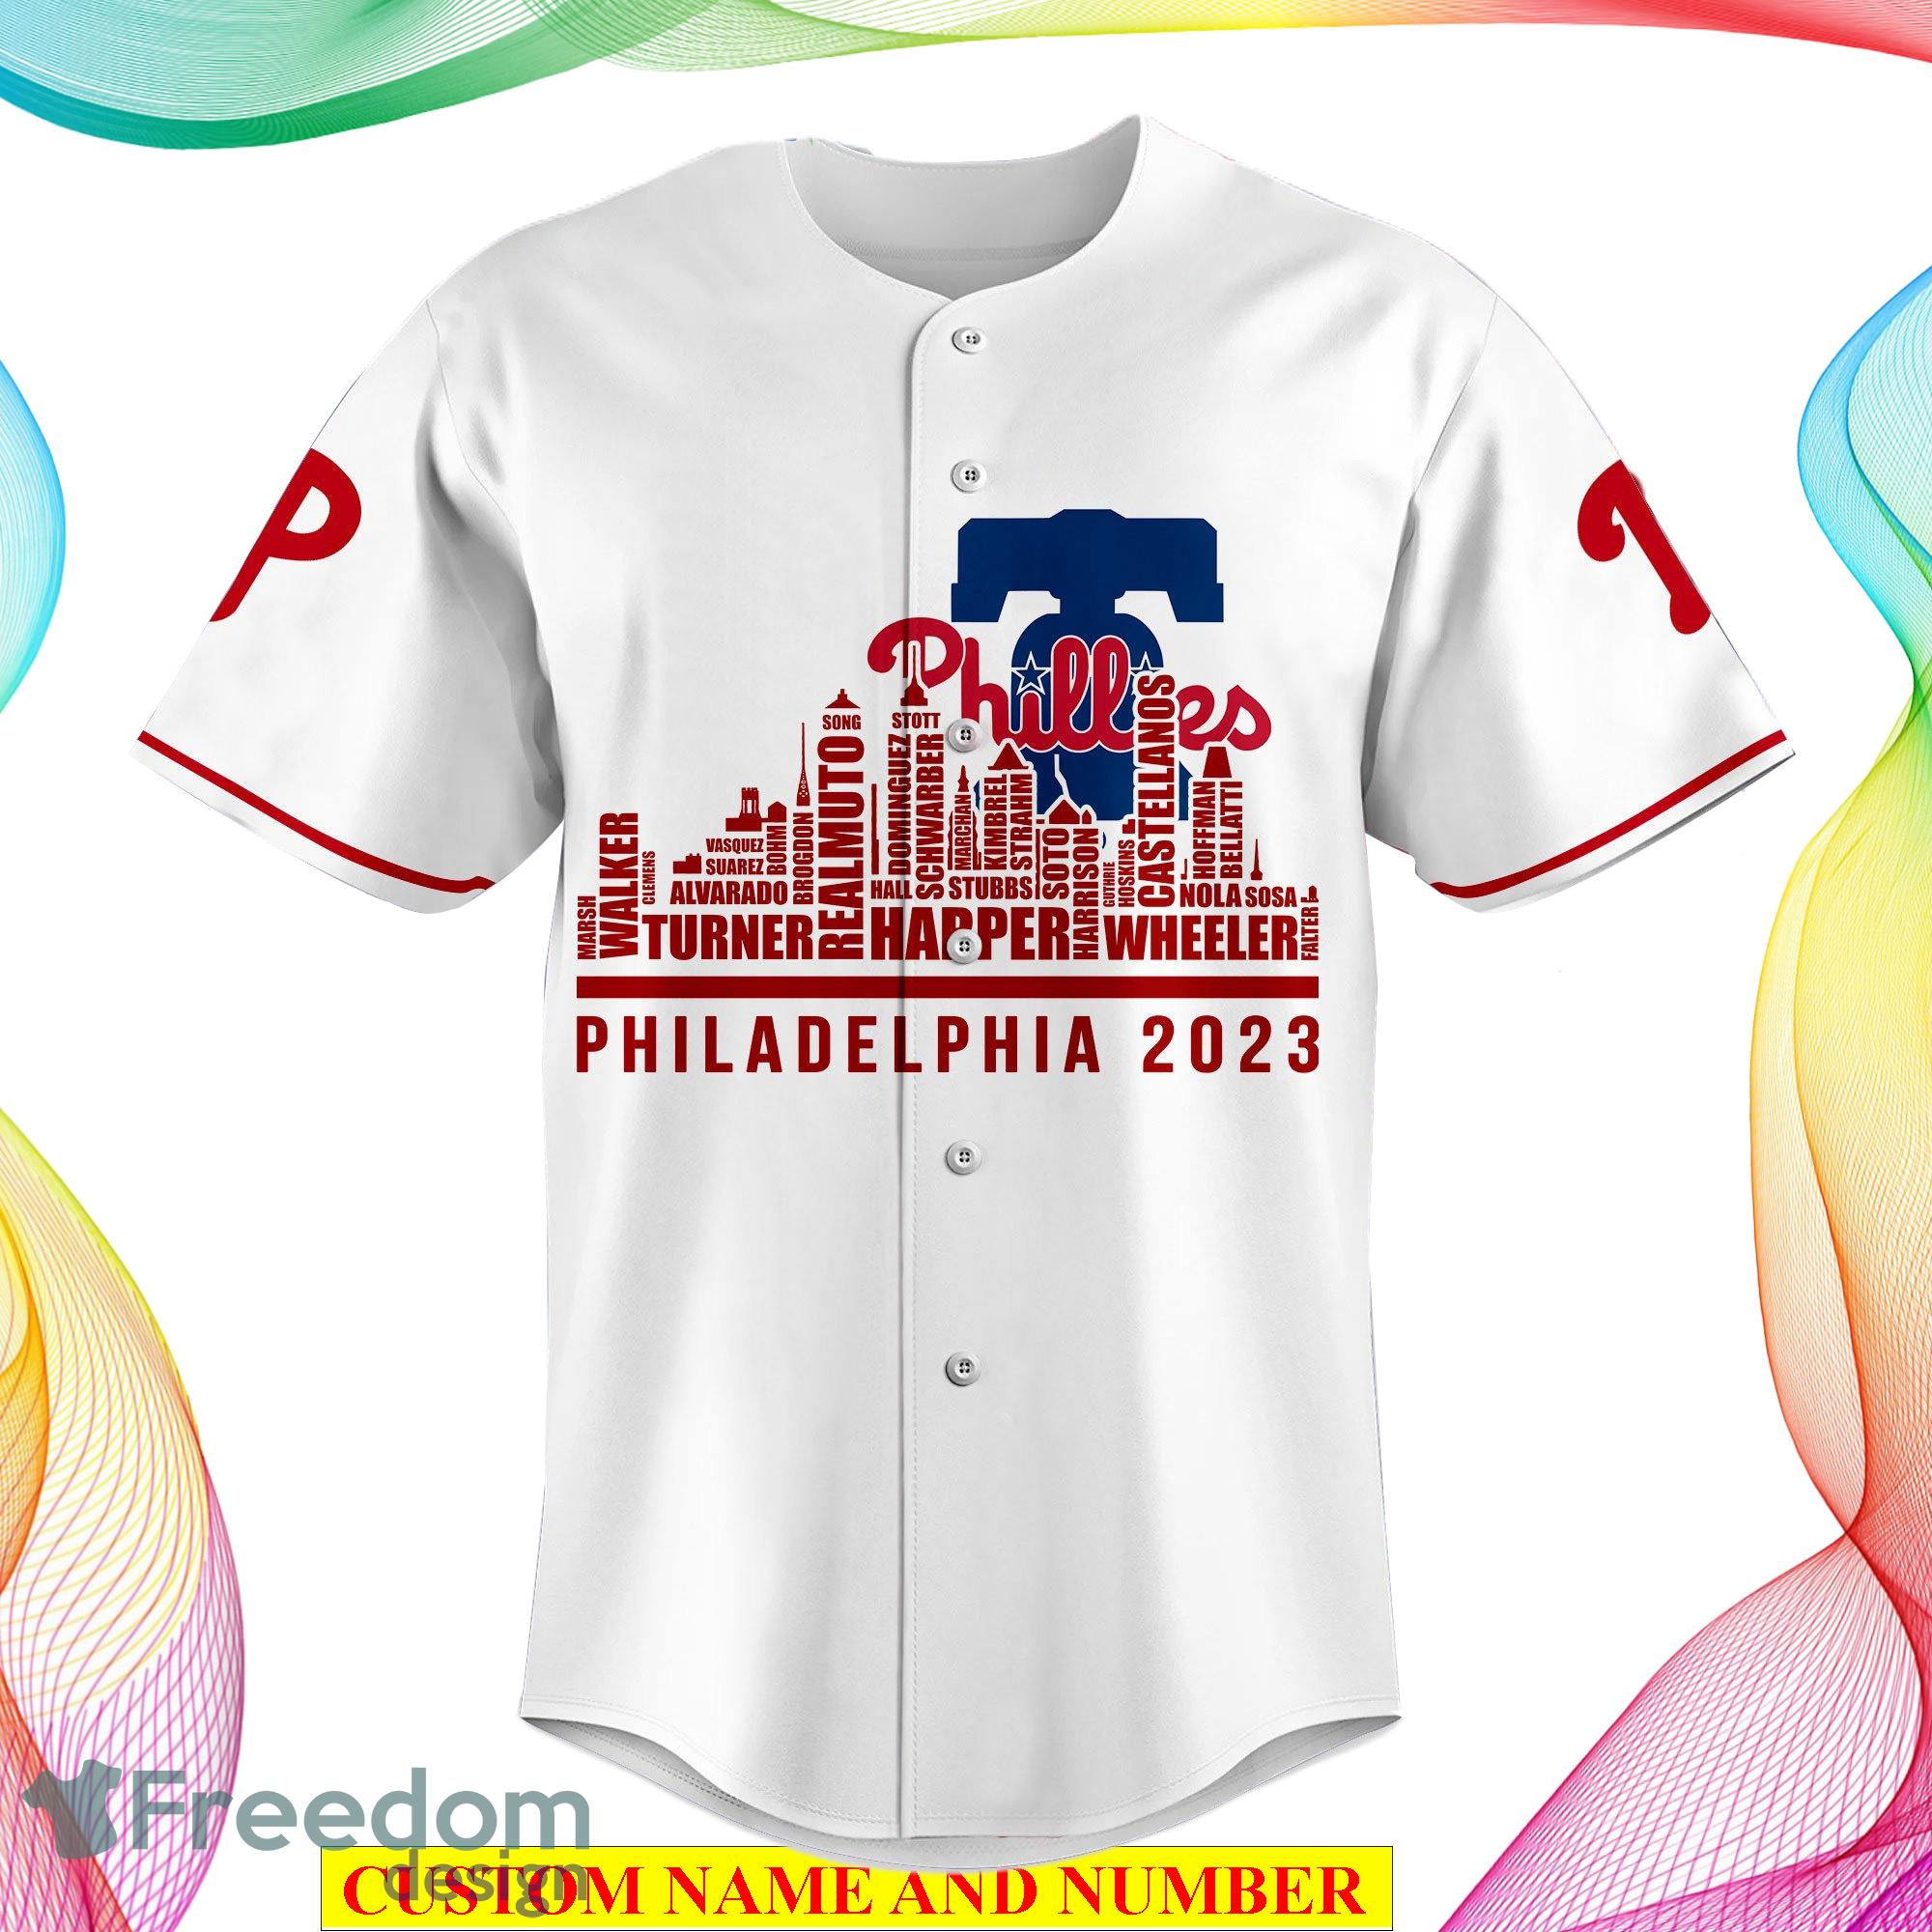 phillies team jerseys